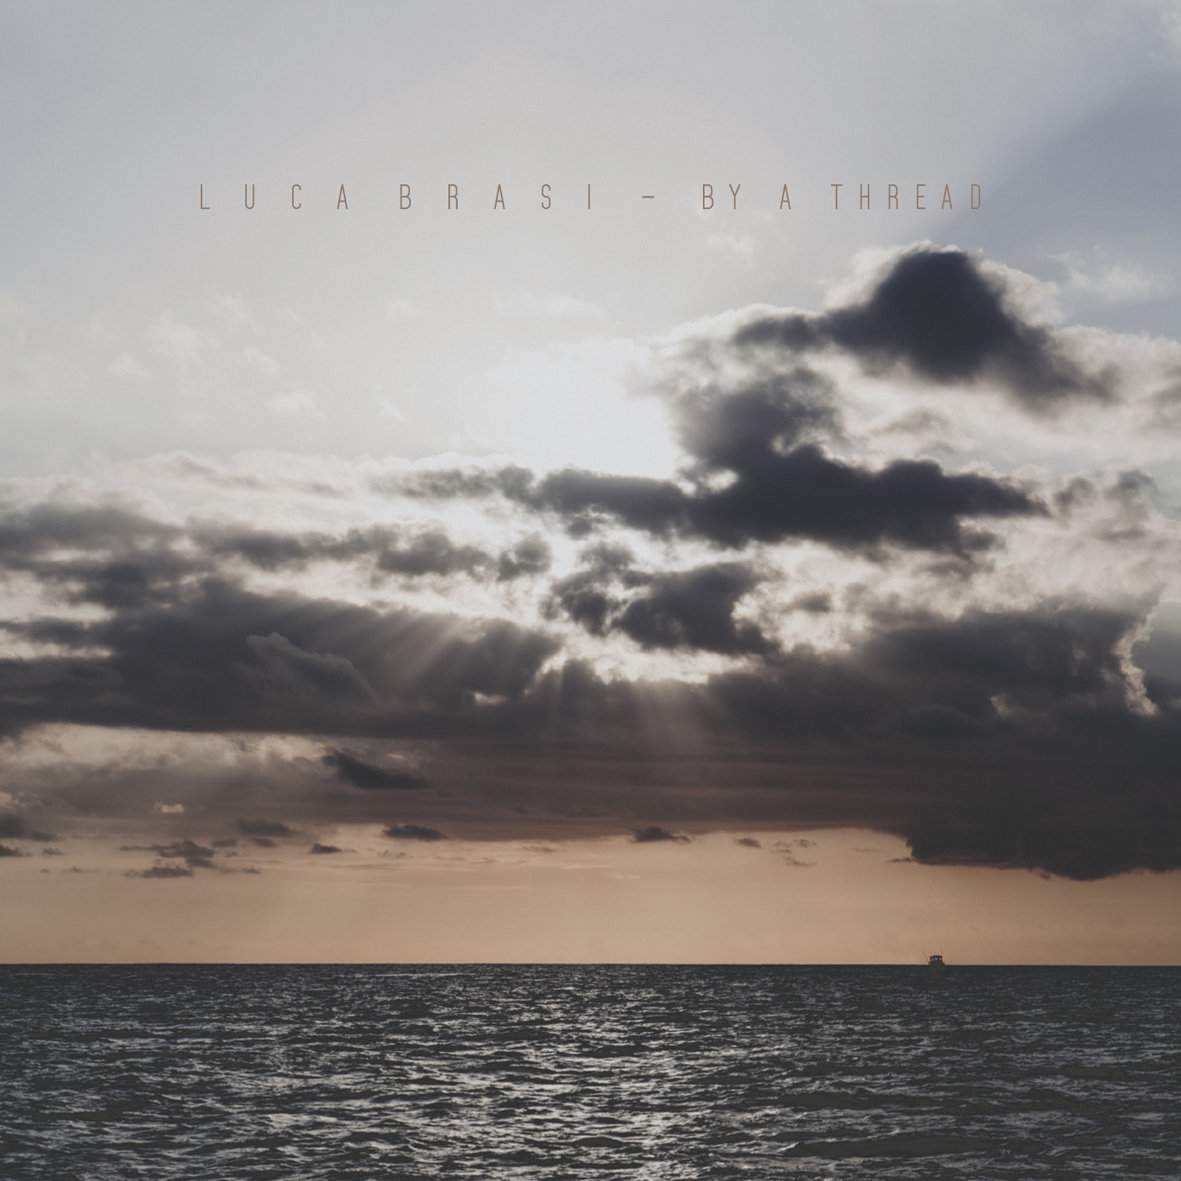 Luca Brasi - By a Thread